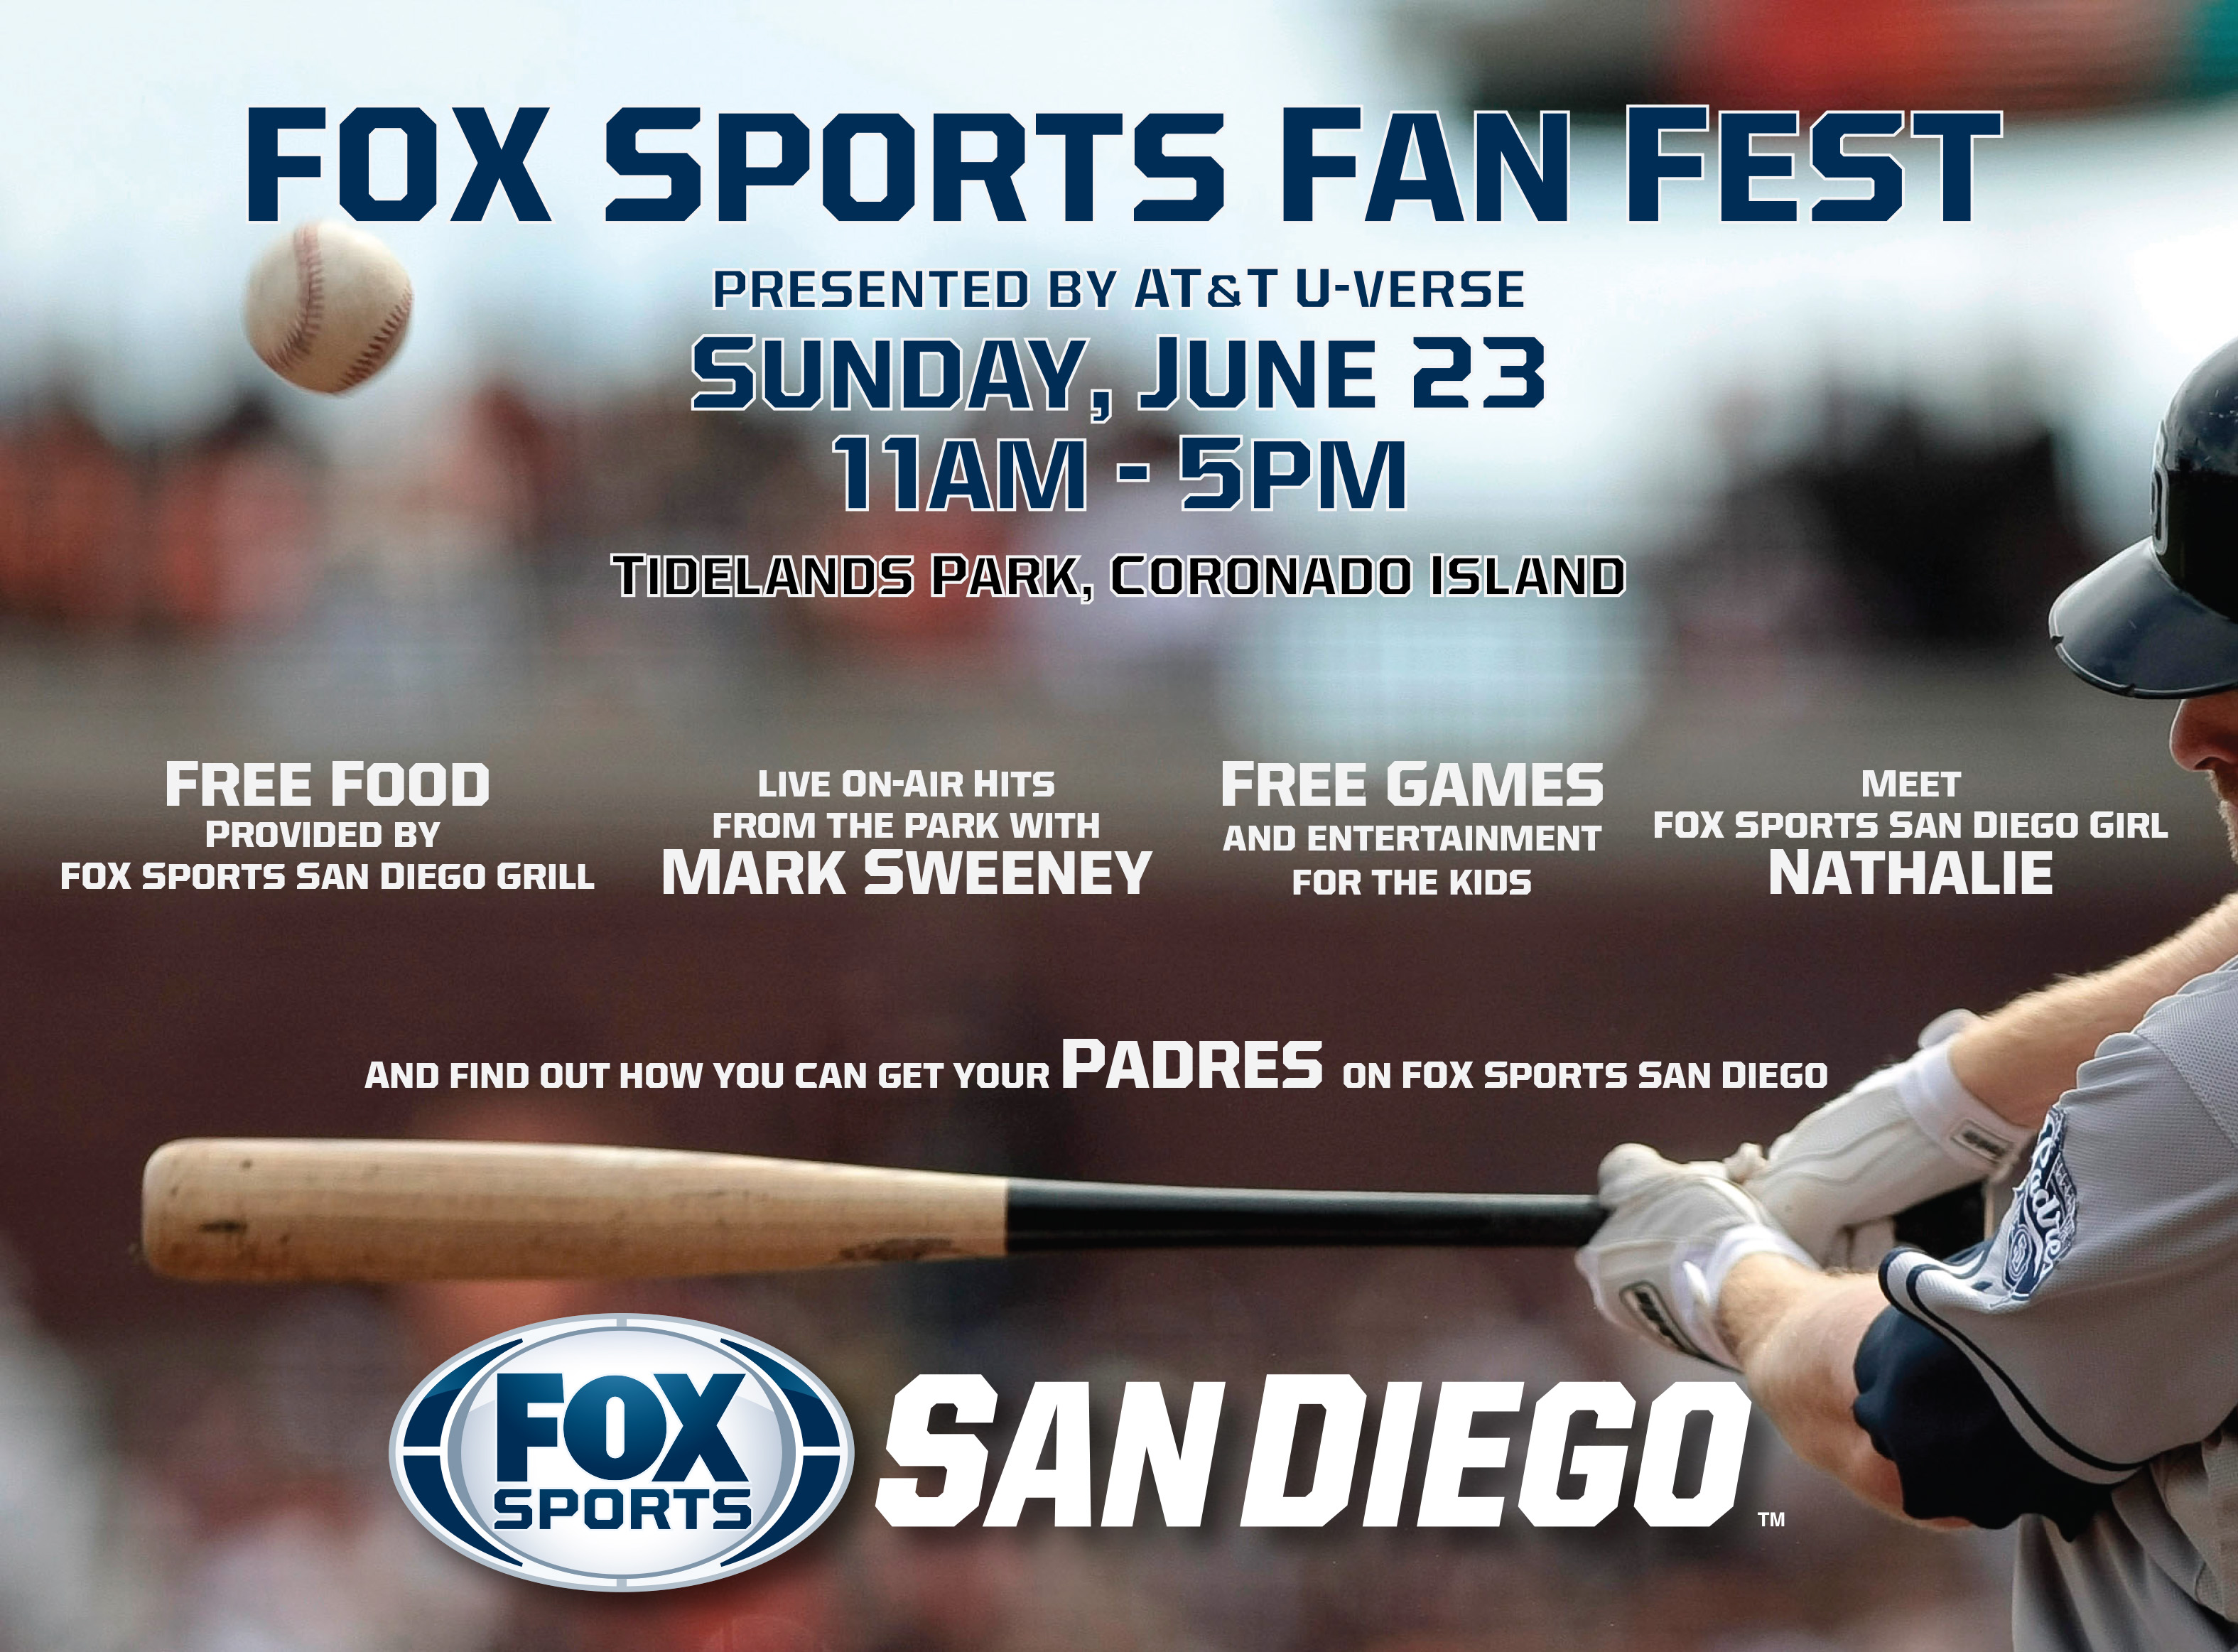 FOX Sports San Diego Hosts Fan Fest at Tidelands Park this Sunday